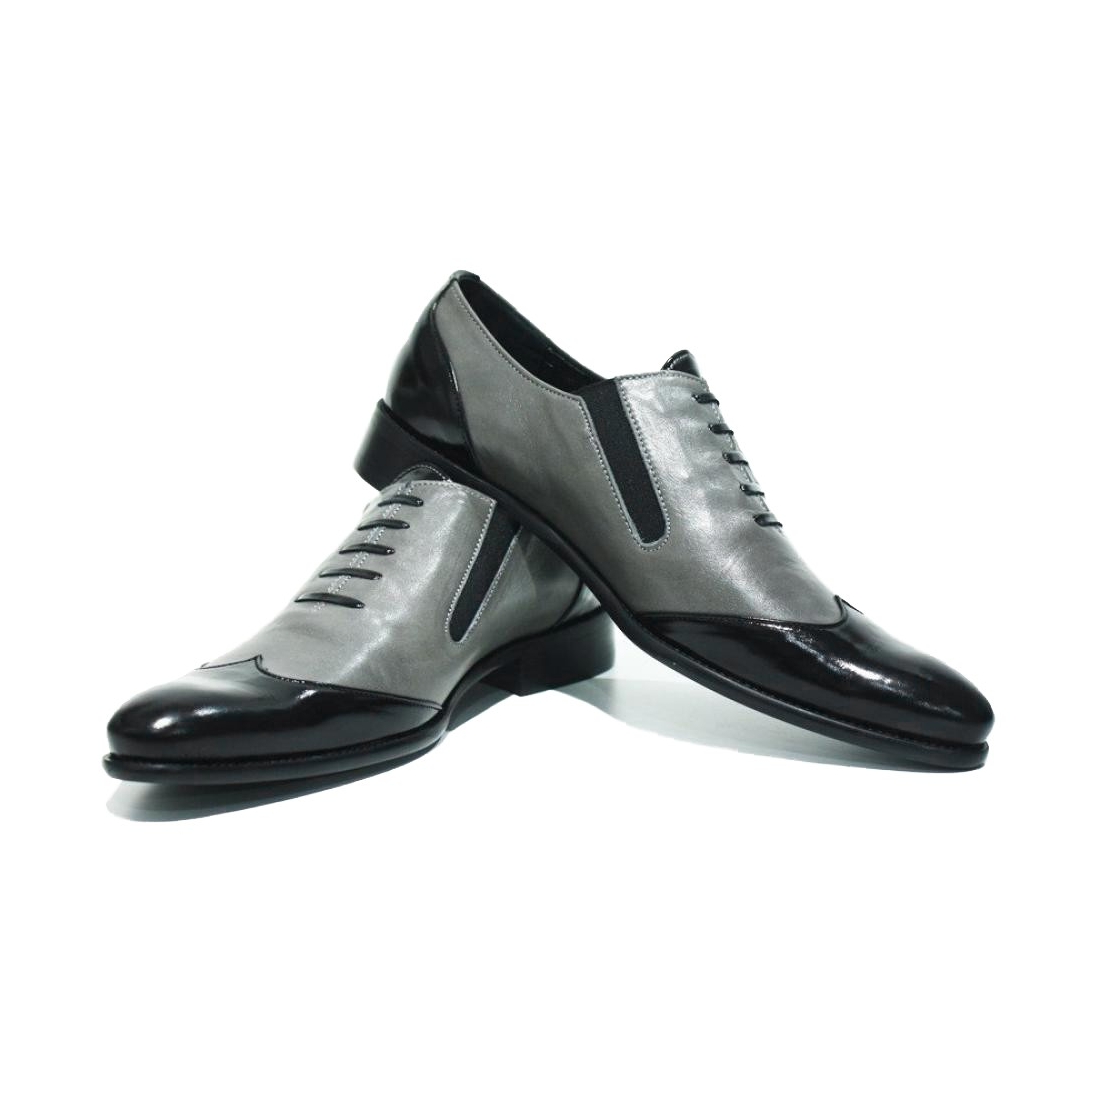 bilag bånd Vanding Modello Trevi - Gray Slip-On Moccasins Loafers - Cowhide Smooth Leather